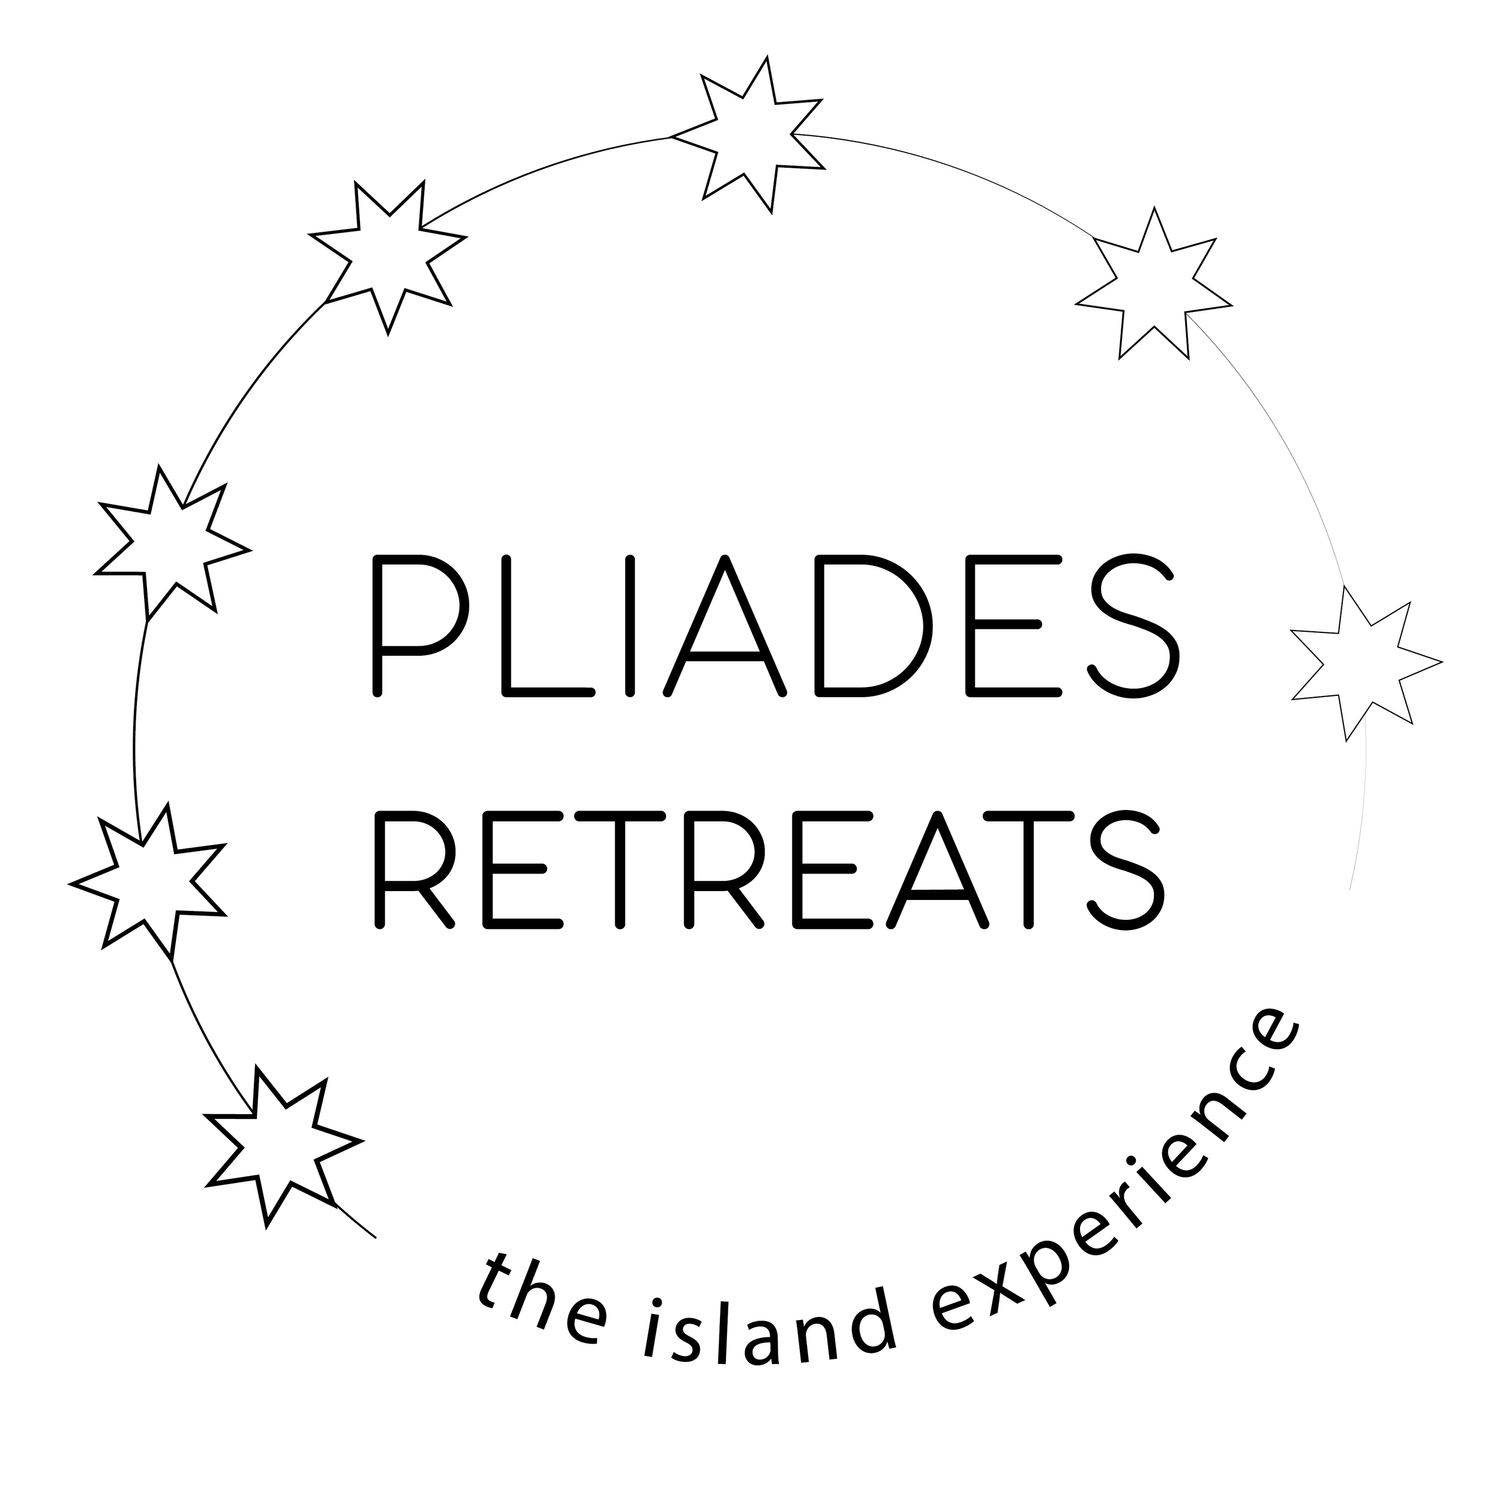 Pliades retreats